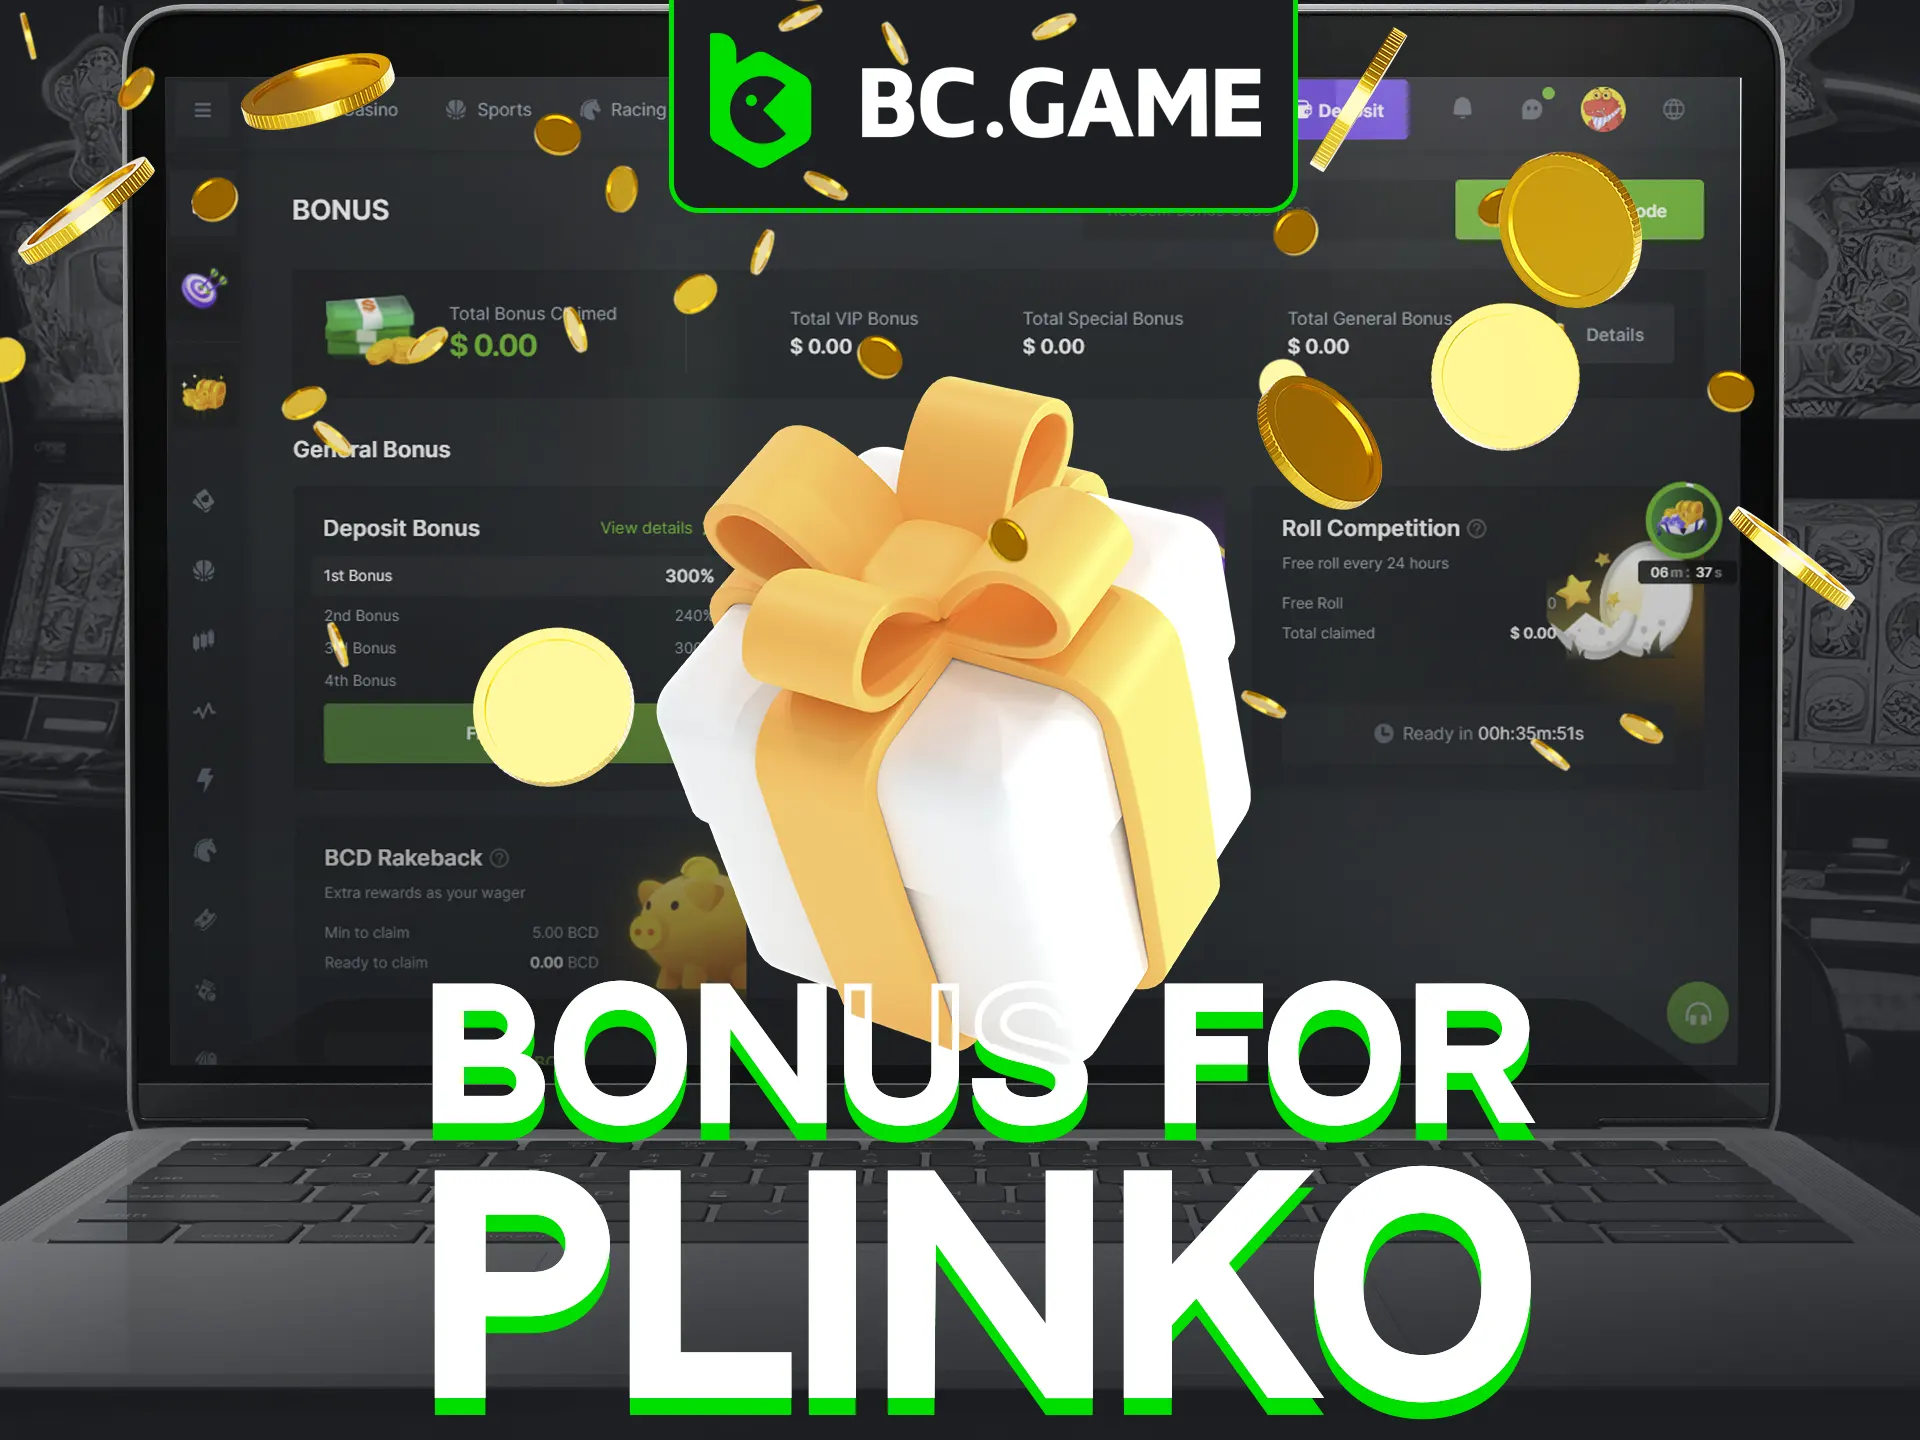 Get a 300% bonus for BC Game Plinko.